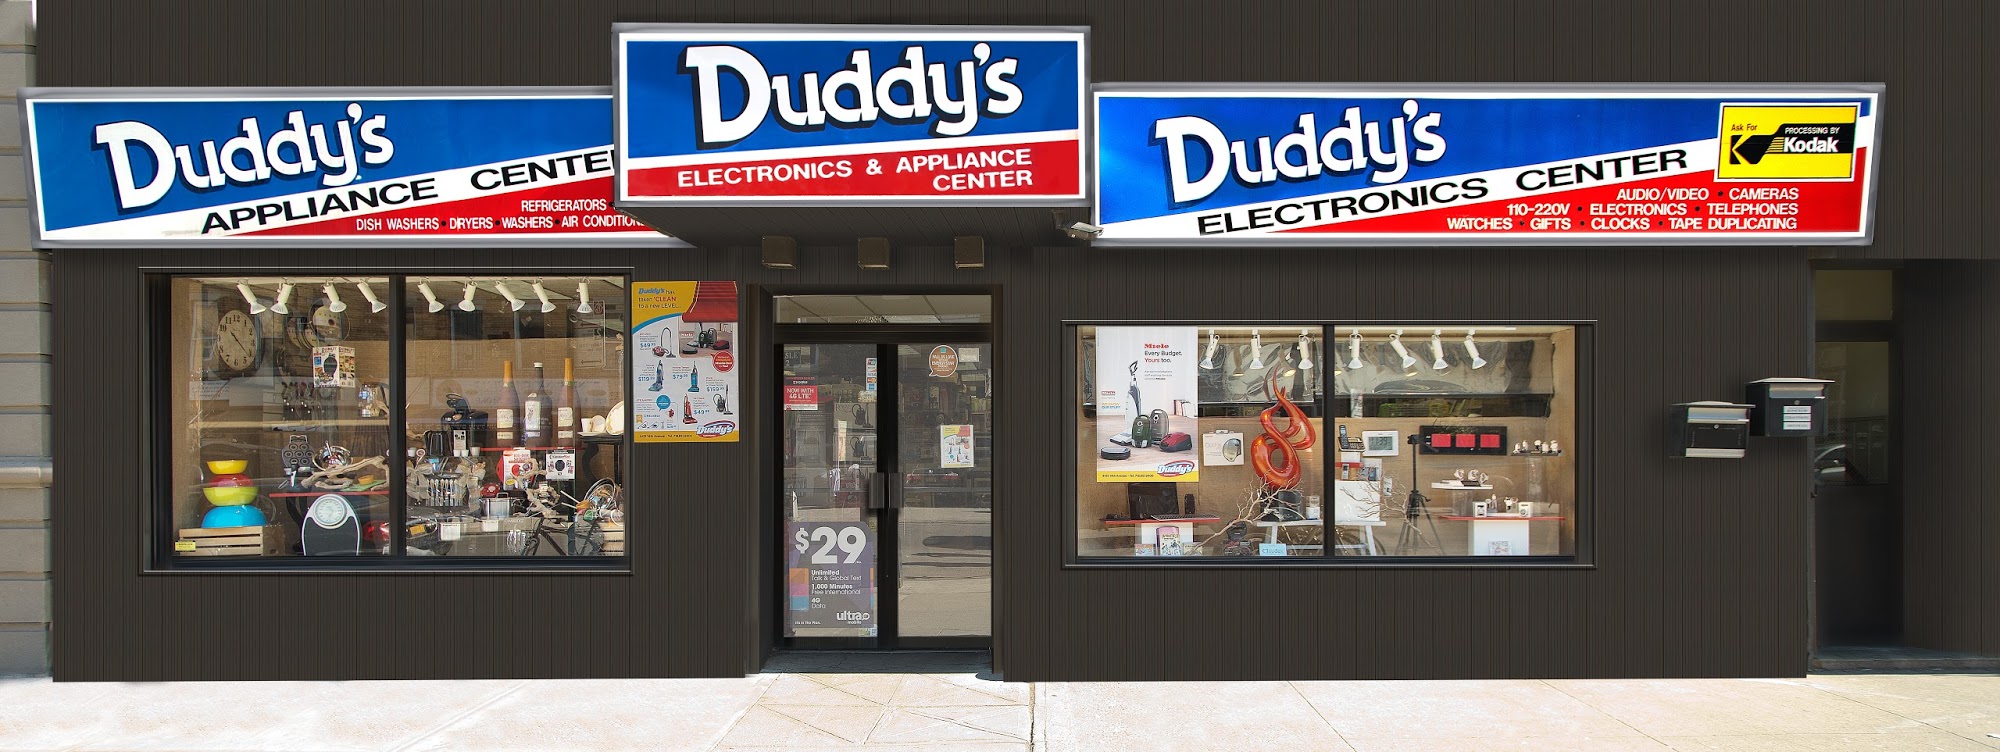 Duddy's Electronics